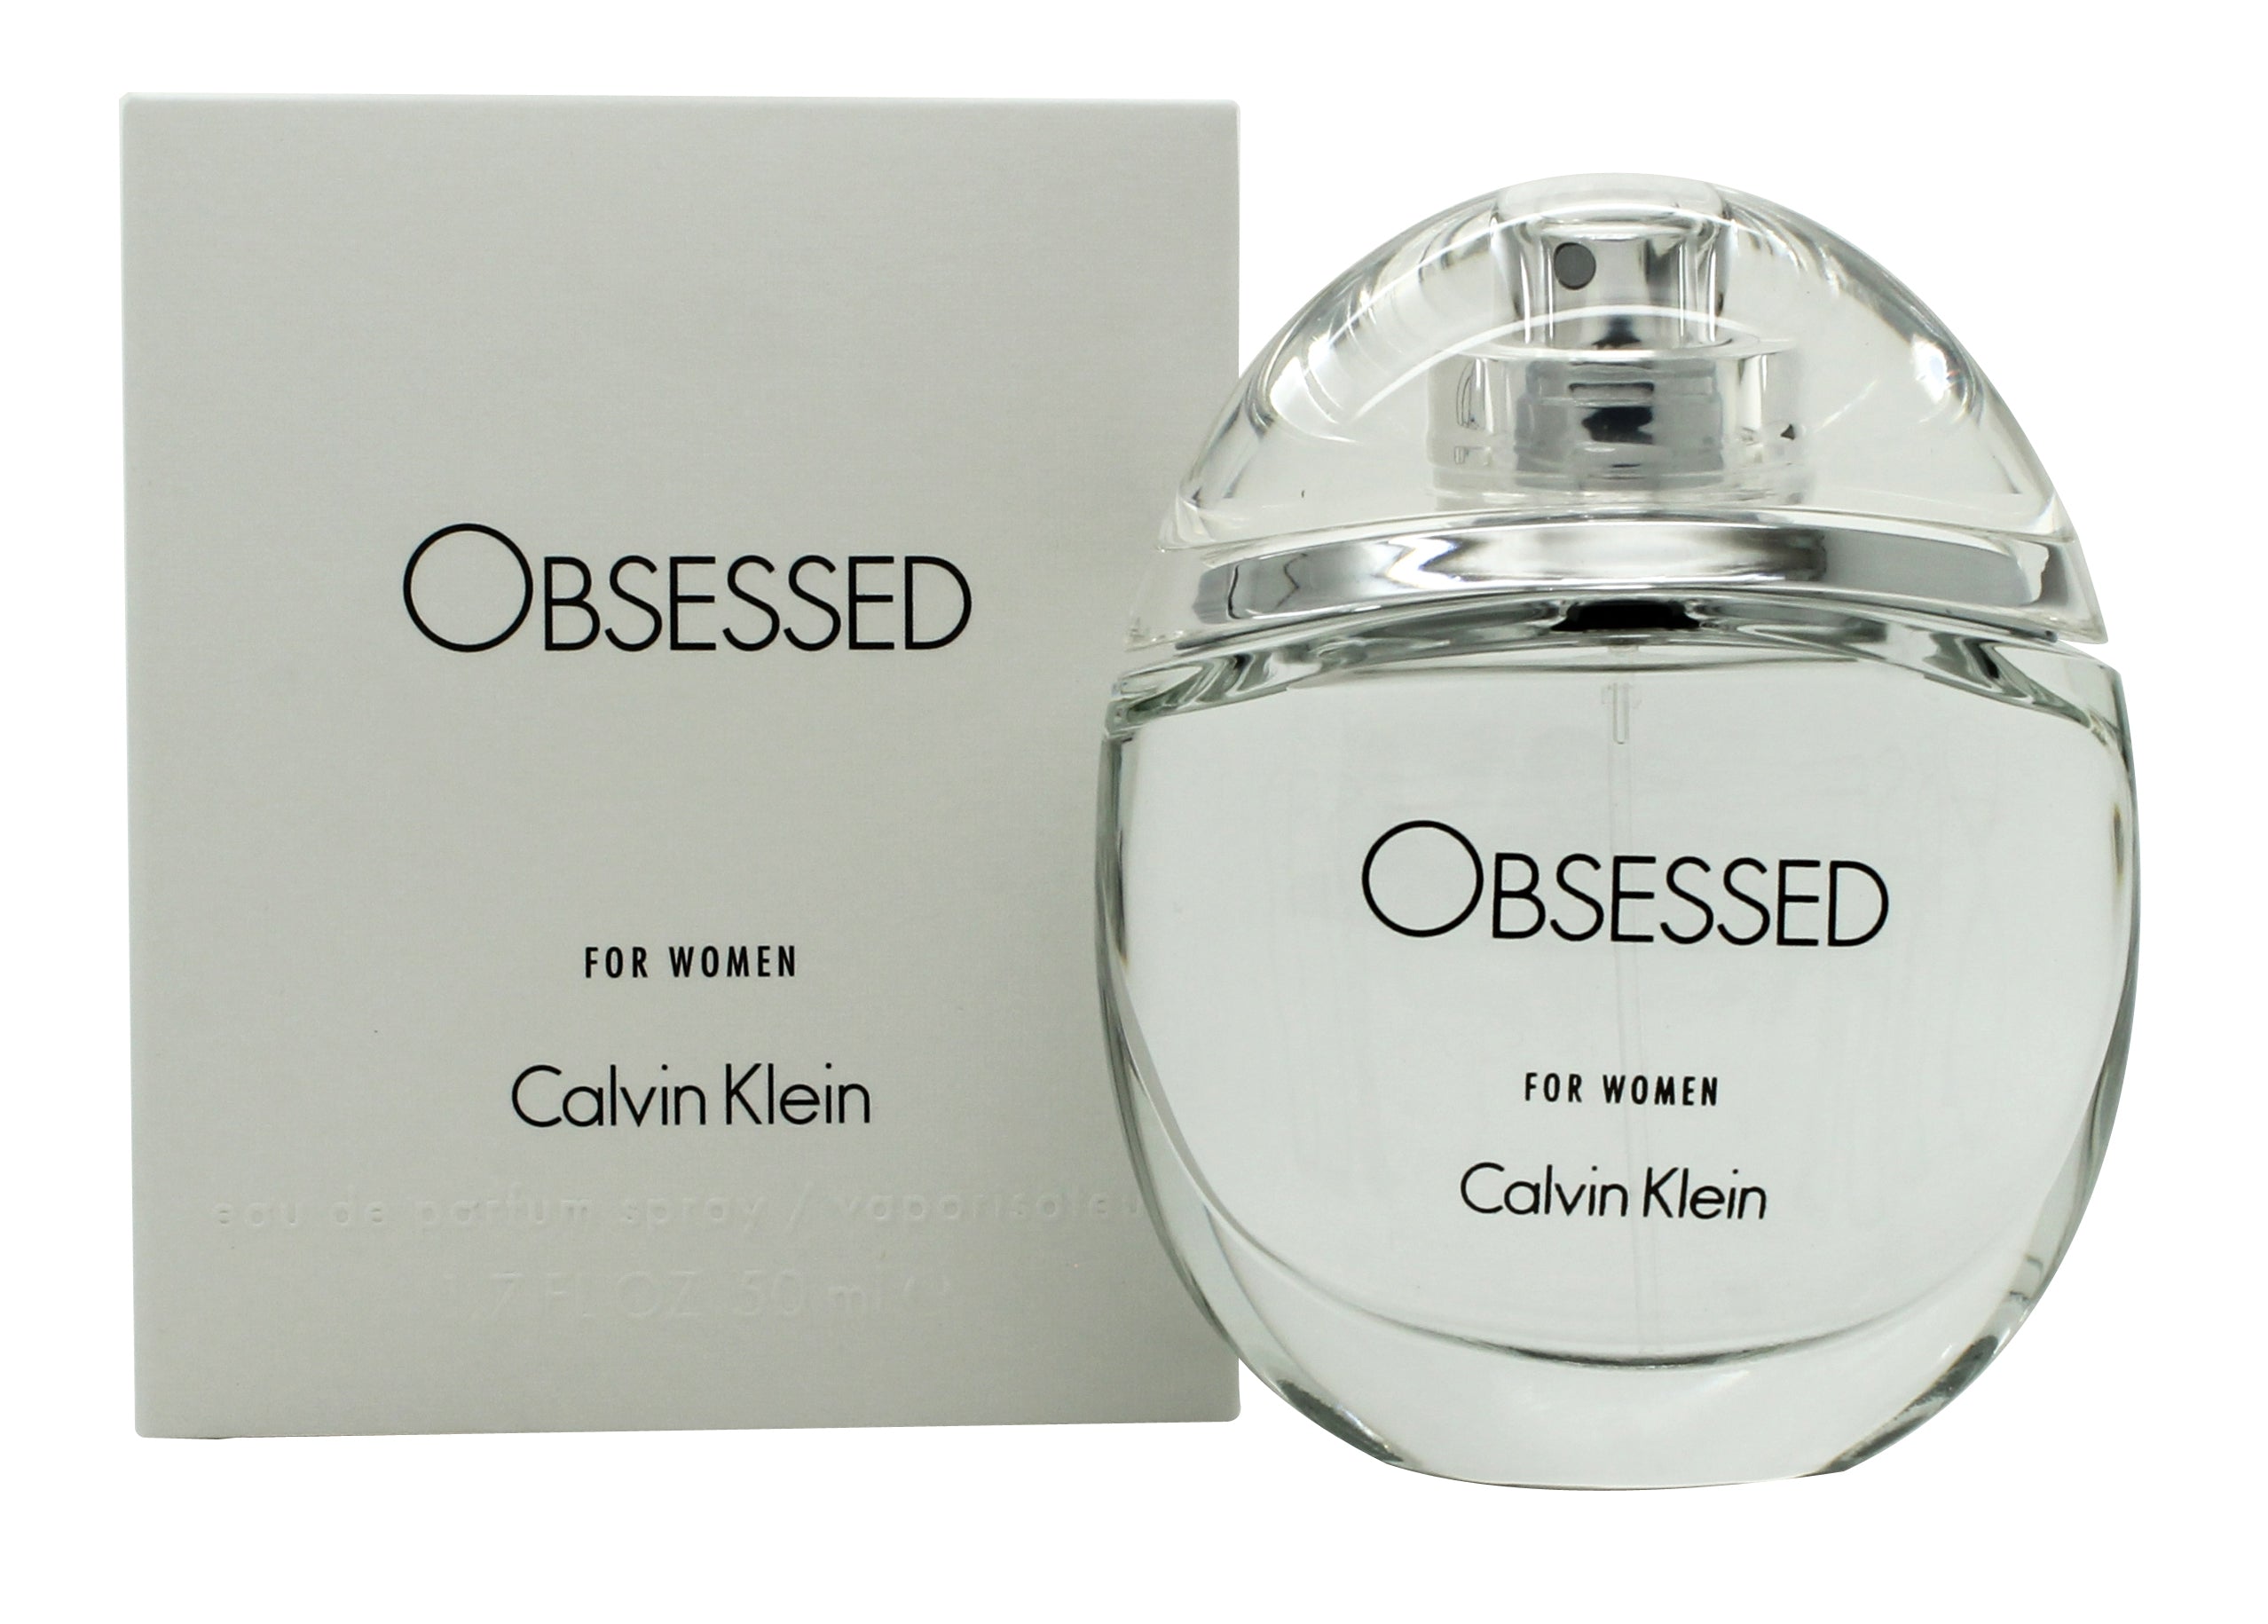 View Calvin Klein Obsessed for Women Eau de Parfum 50ml Spray information